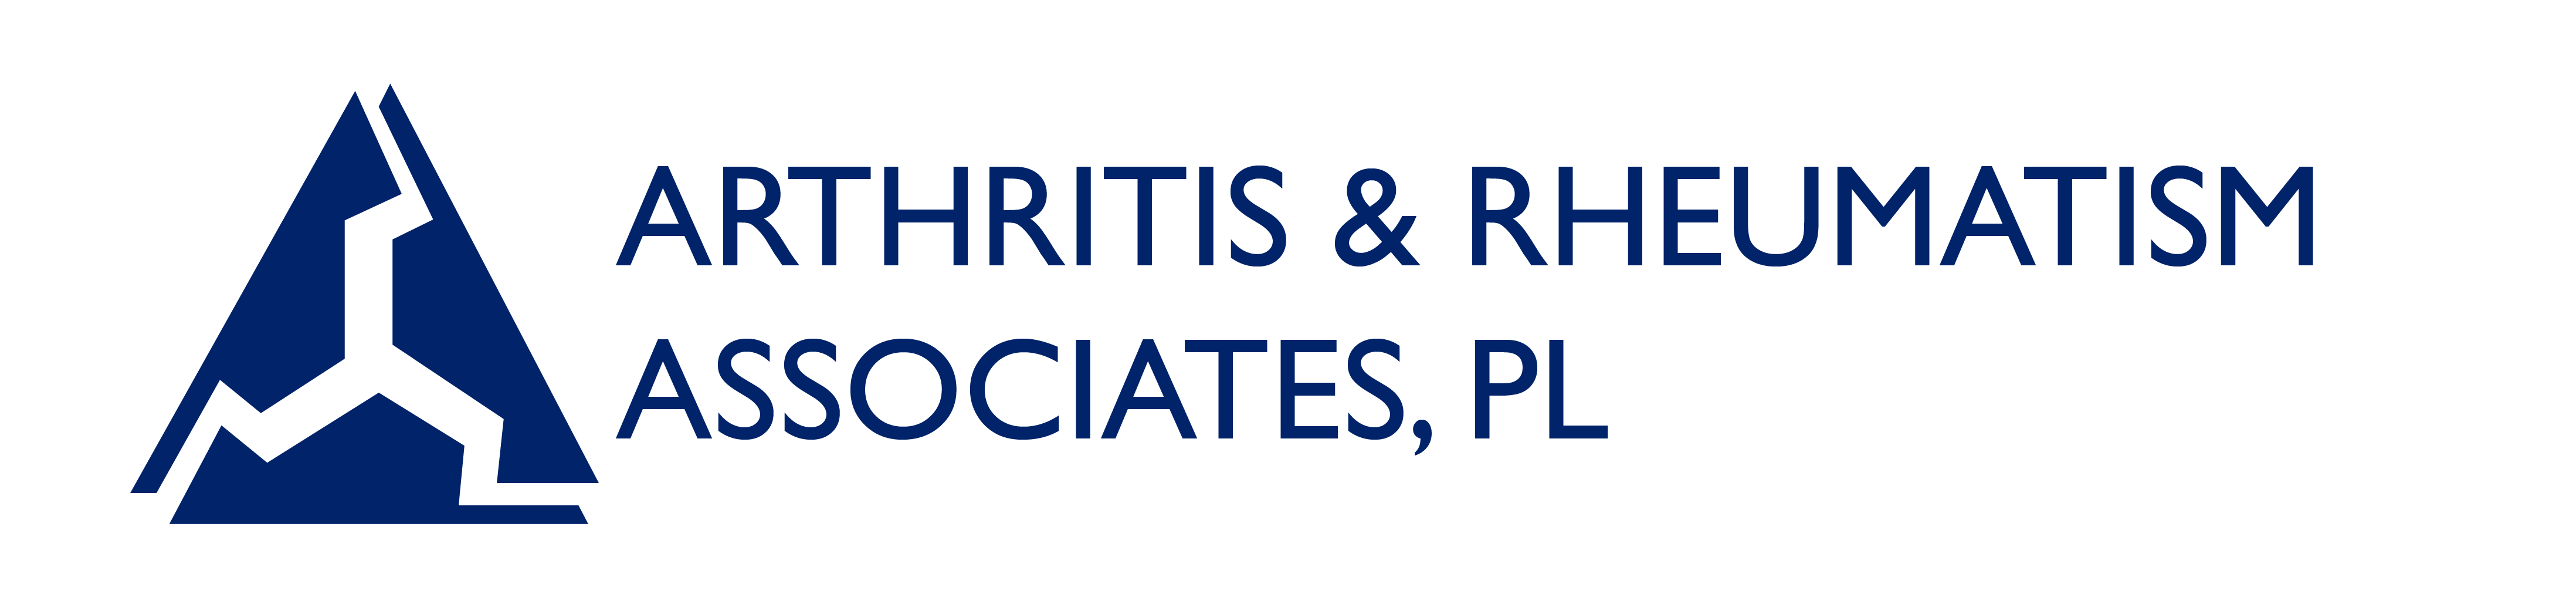 Arthritis & Rheumatism Associates